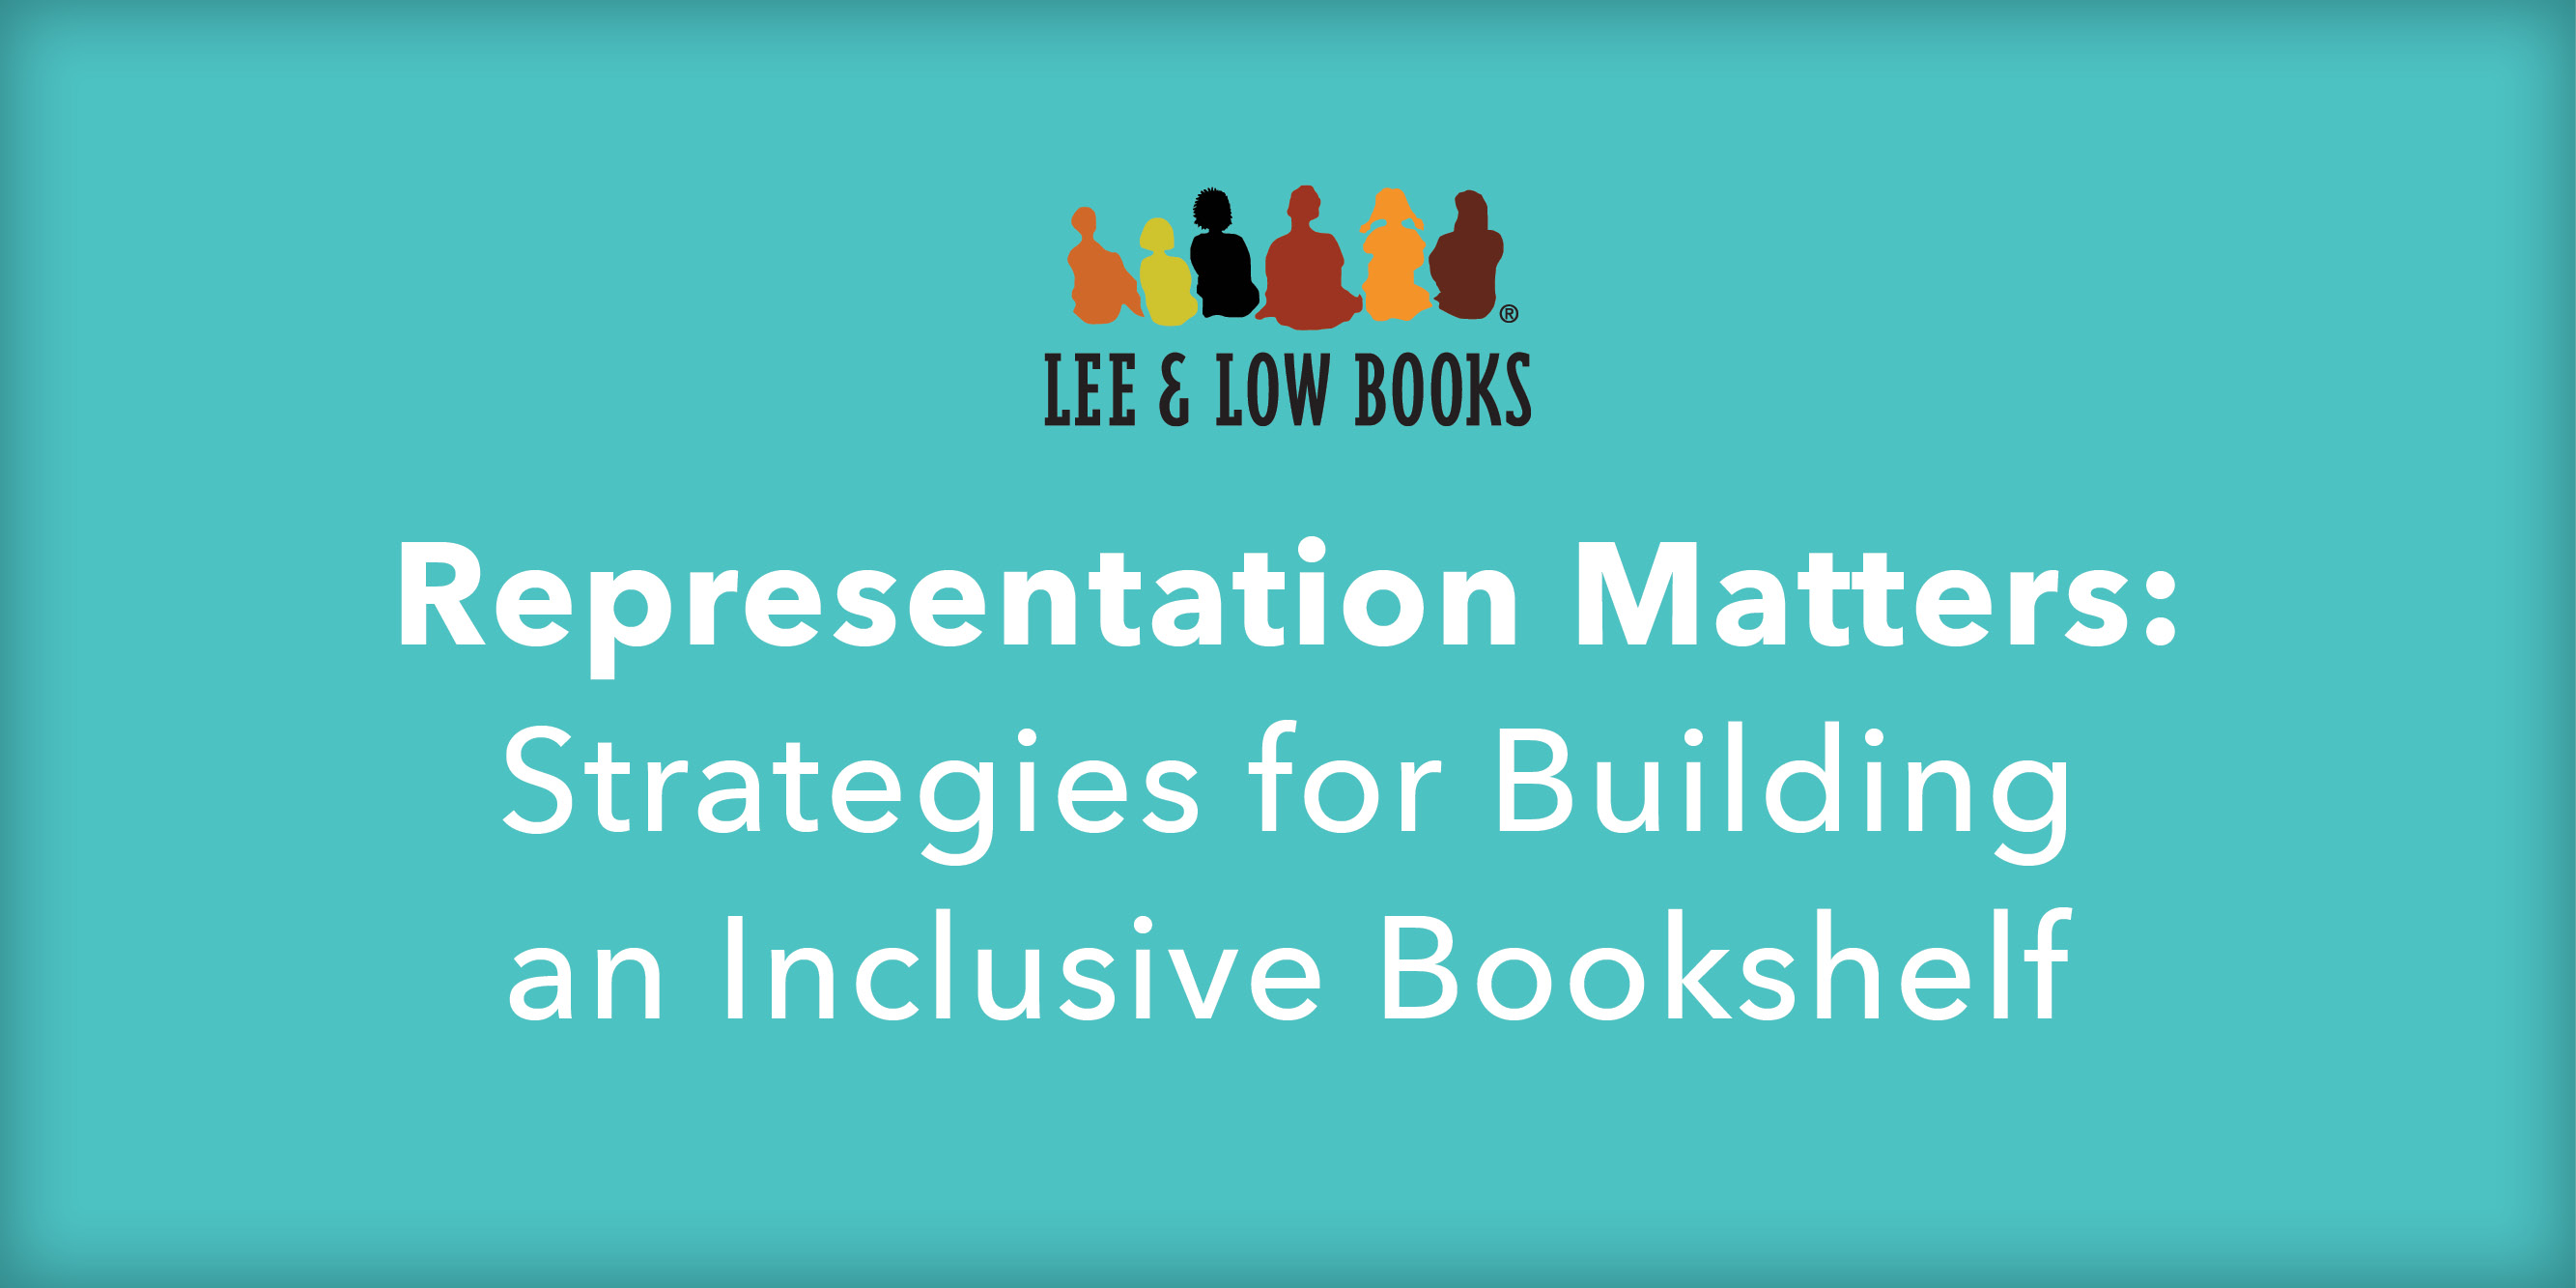 Strategies for Building an Inclusive Bookshelf